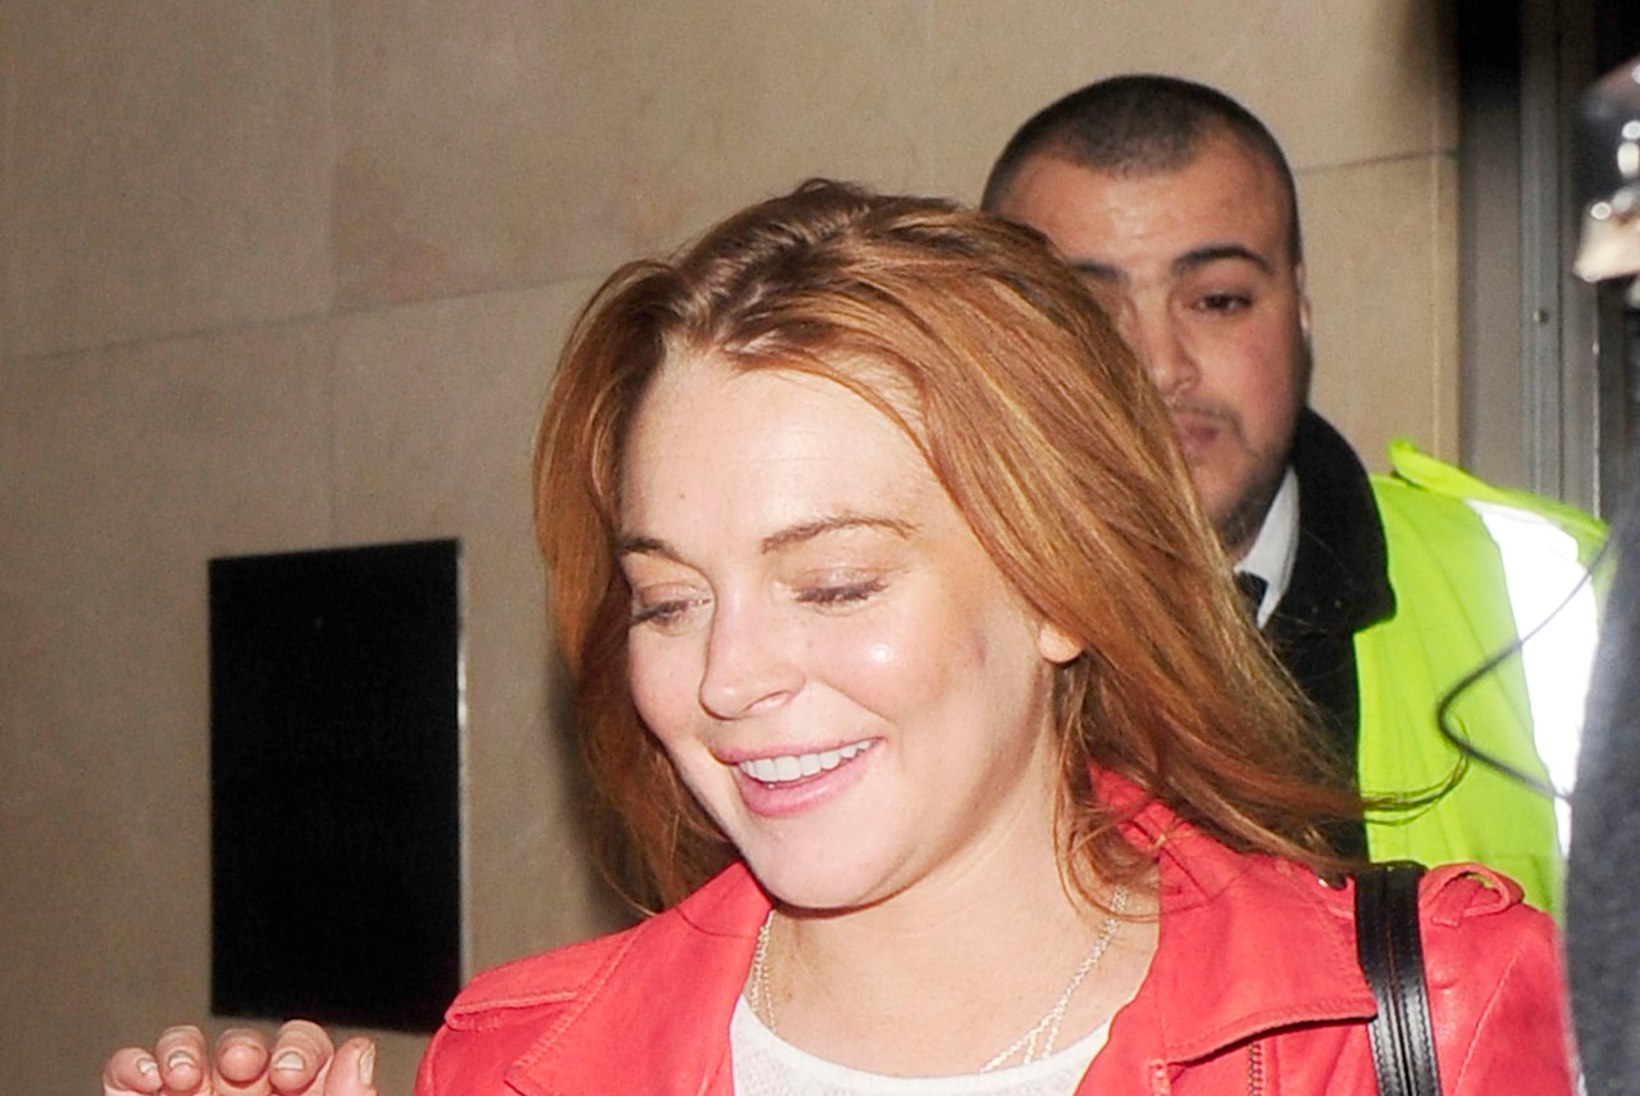 NÄDALA PAPARATSO: Lindsay Lohan käis lõbutsemas, Kourtney Kardashian lastega lennujaamas ja One Directioni poisid Itaalias pidu panemas